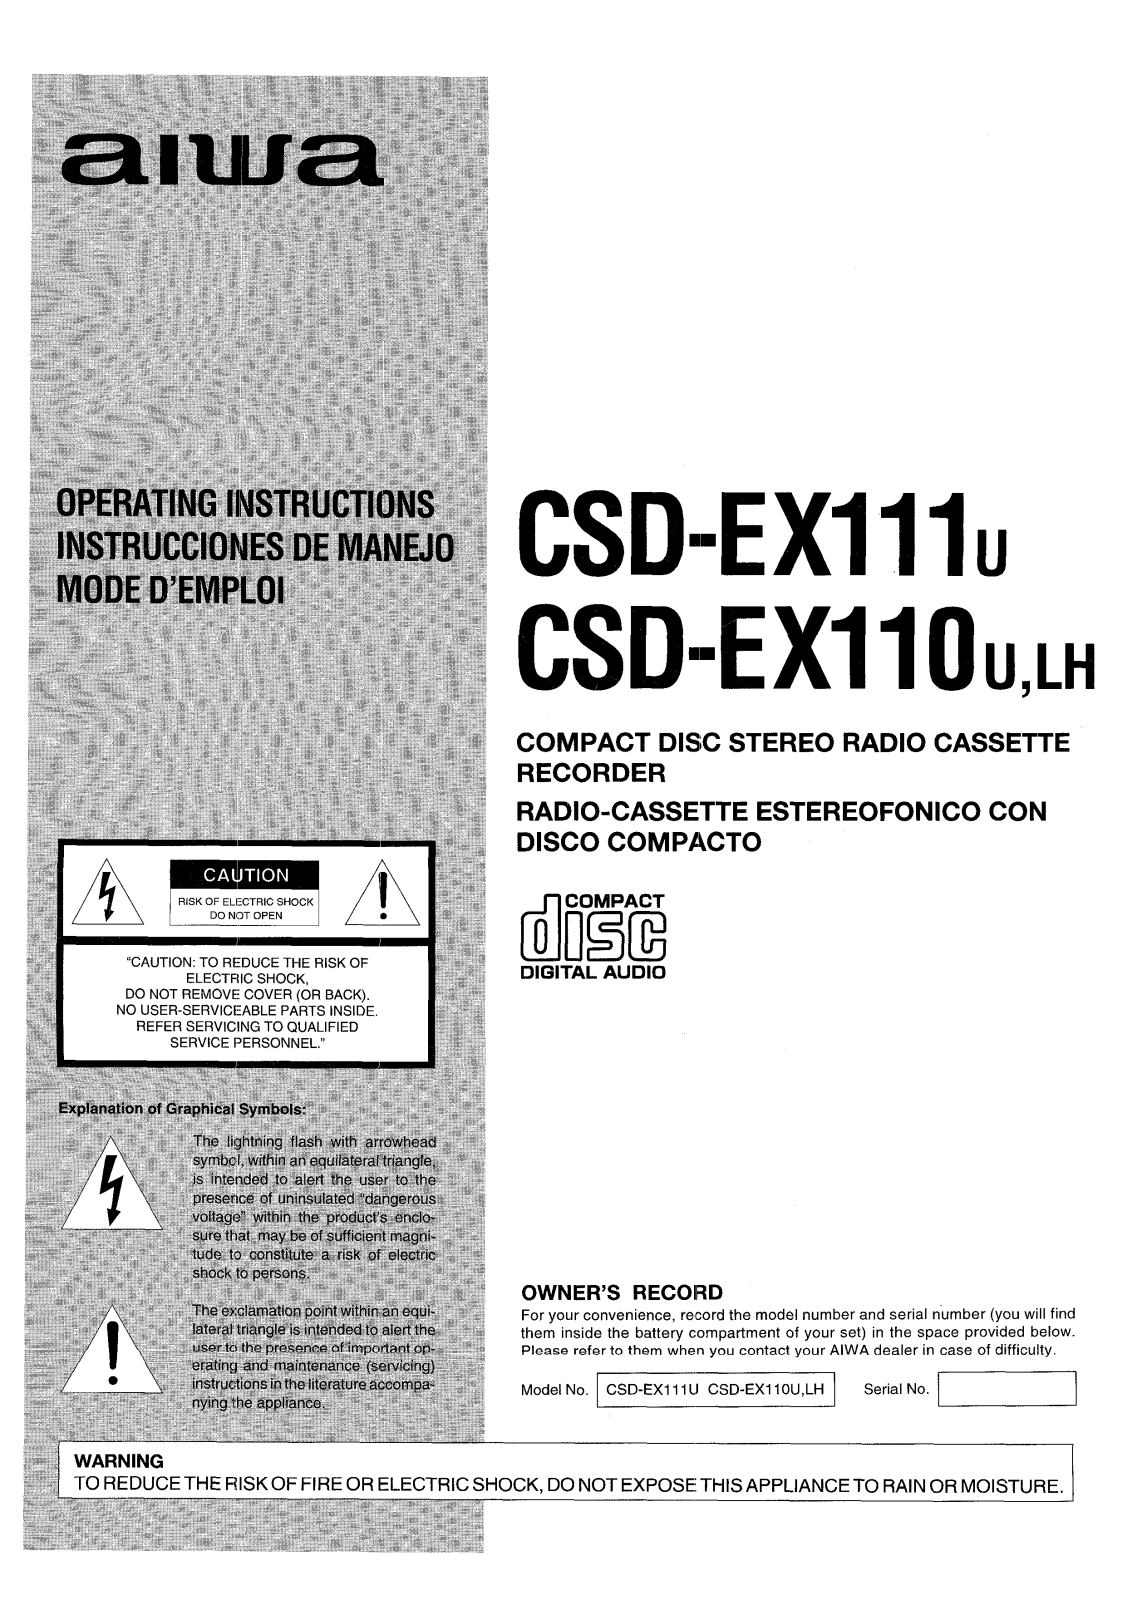 Sony CSD-EX111U, CSD-EX110u, CSD-EX110LH Operating Manual